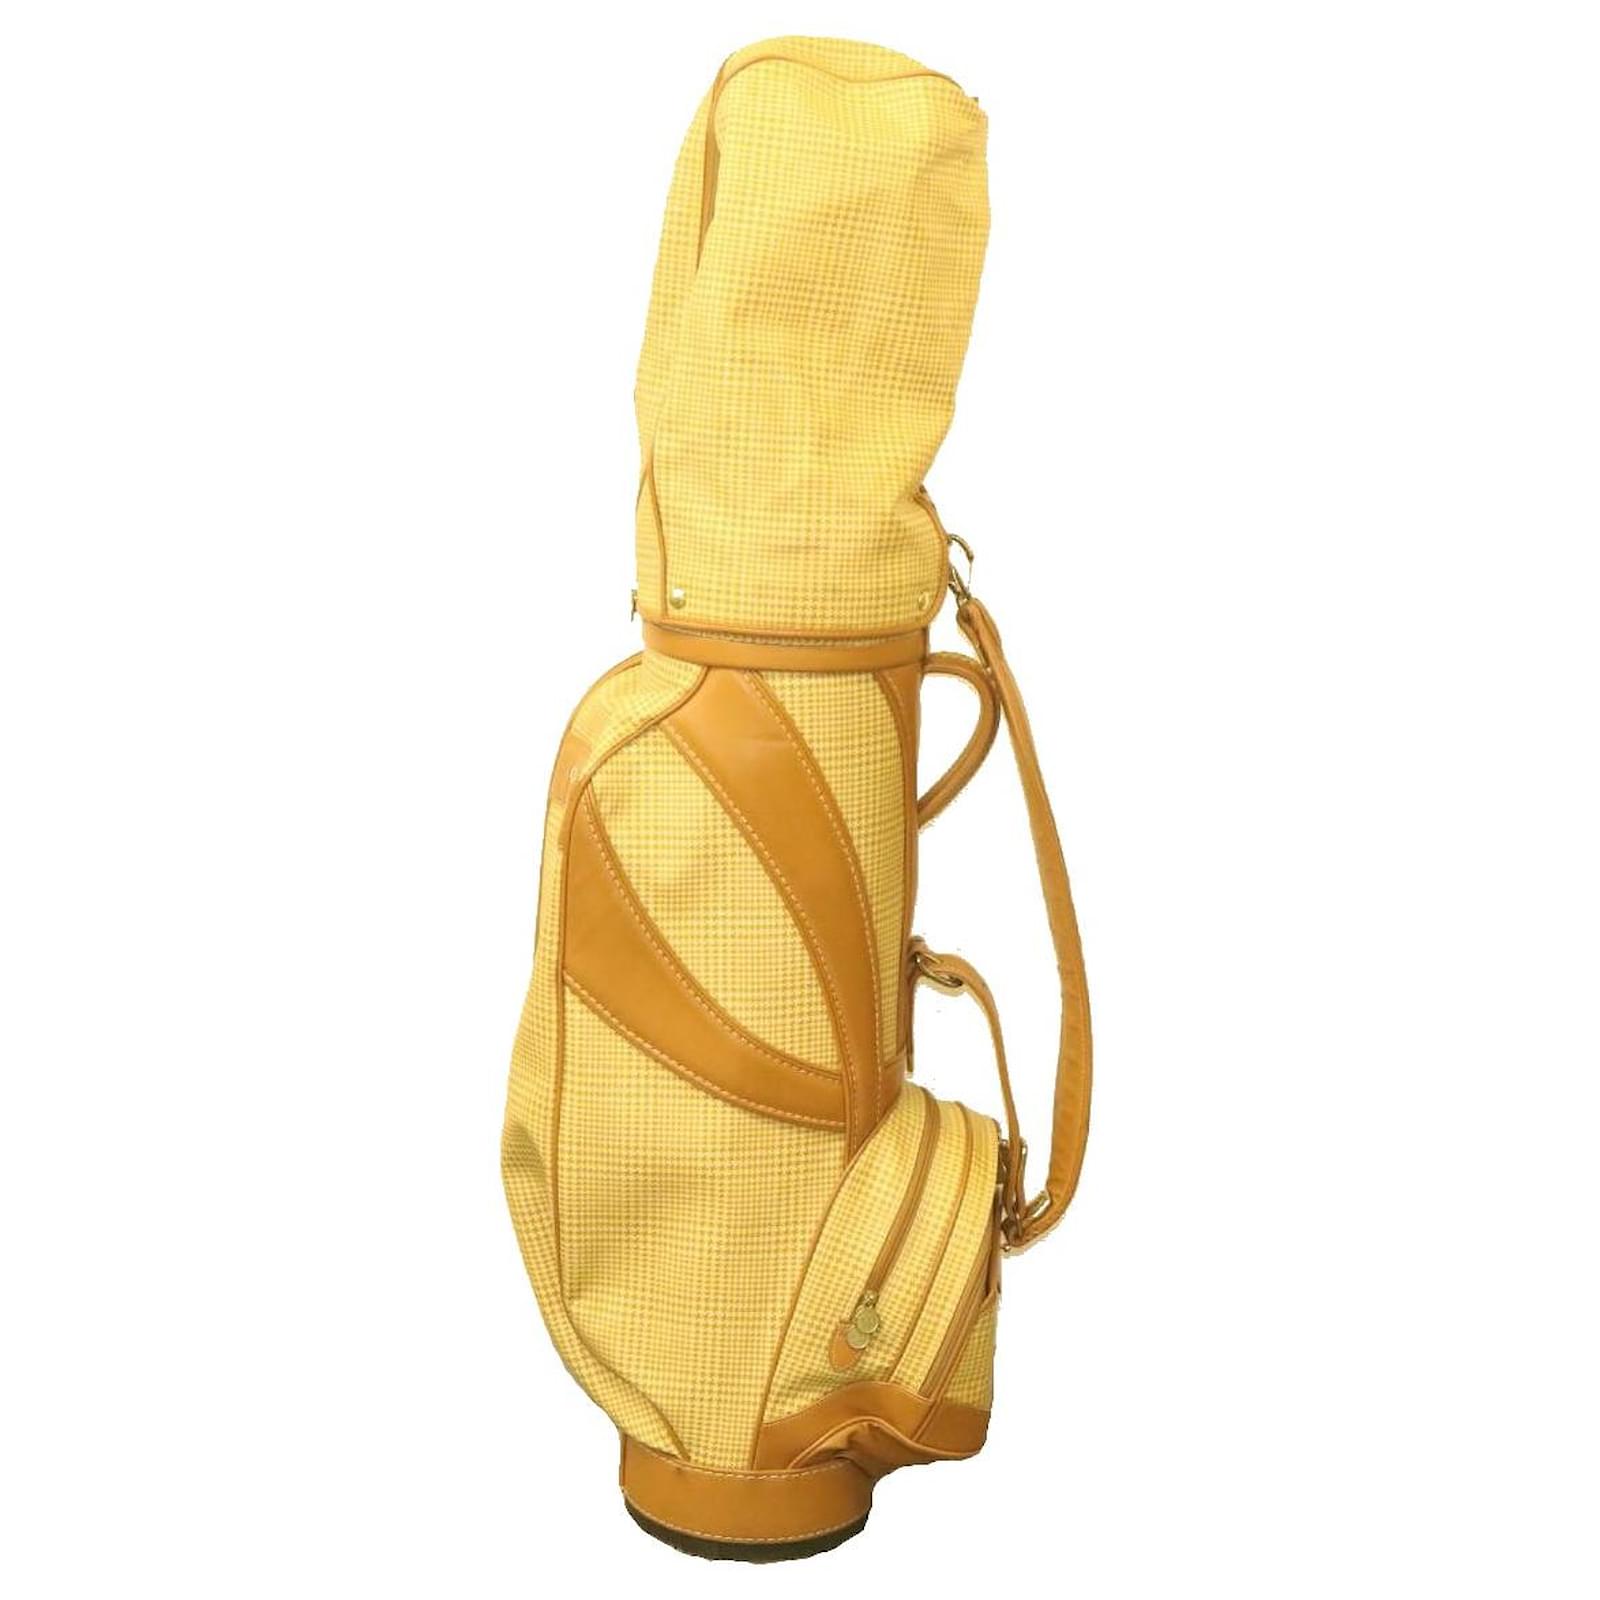 Christian Dior golf club bag caddy bag 3.3 kg nylon vintage rare japan used